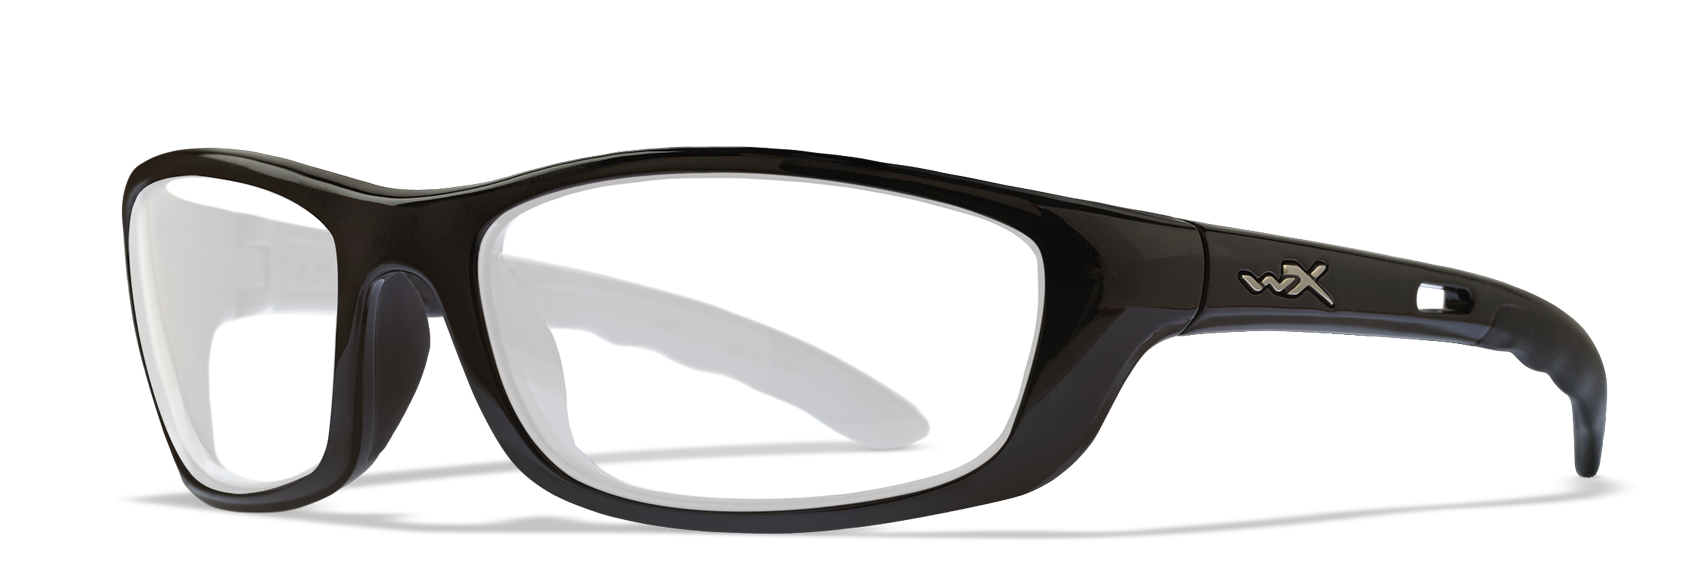 Wiley X P-17 Oval Sunglasses  Gloss Black 61-18-120